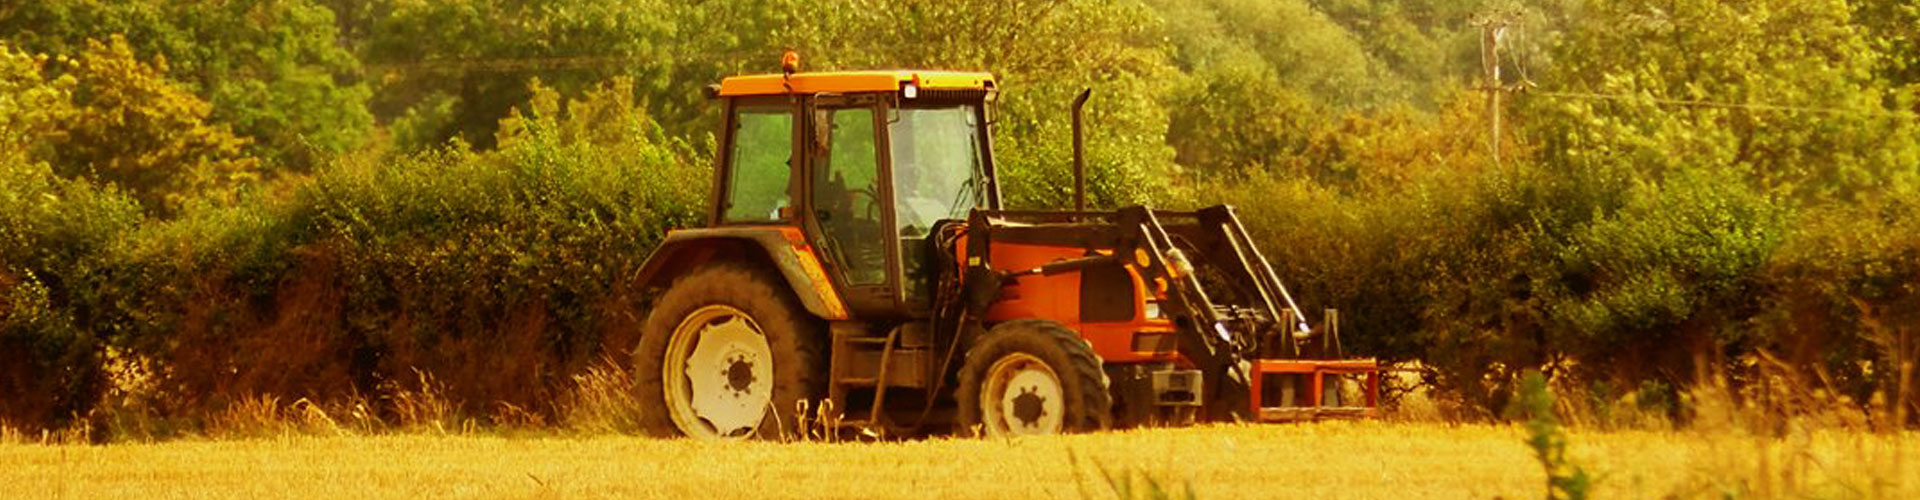 agritech image mechanized farming.jpg